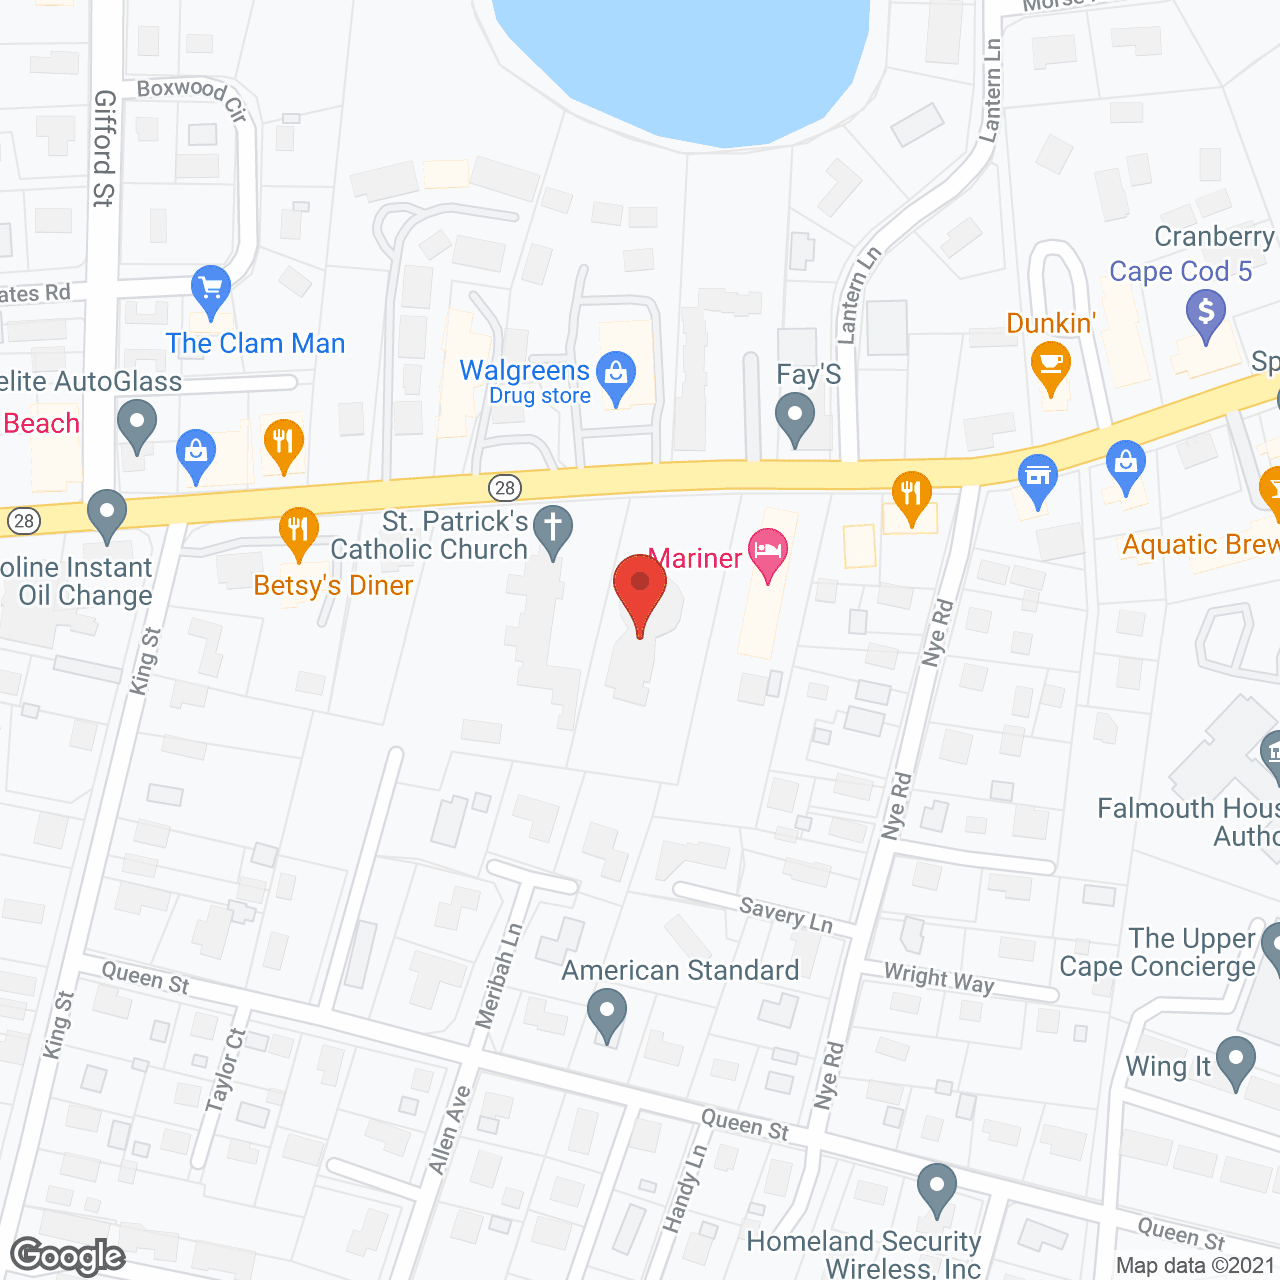 Falmouth Nursing Home in google map